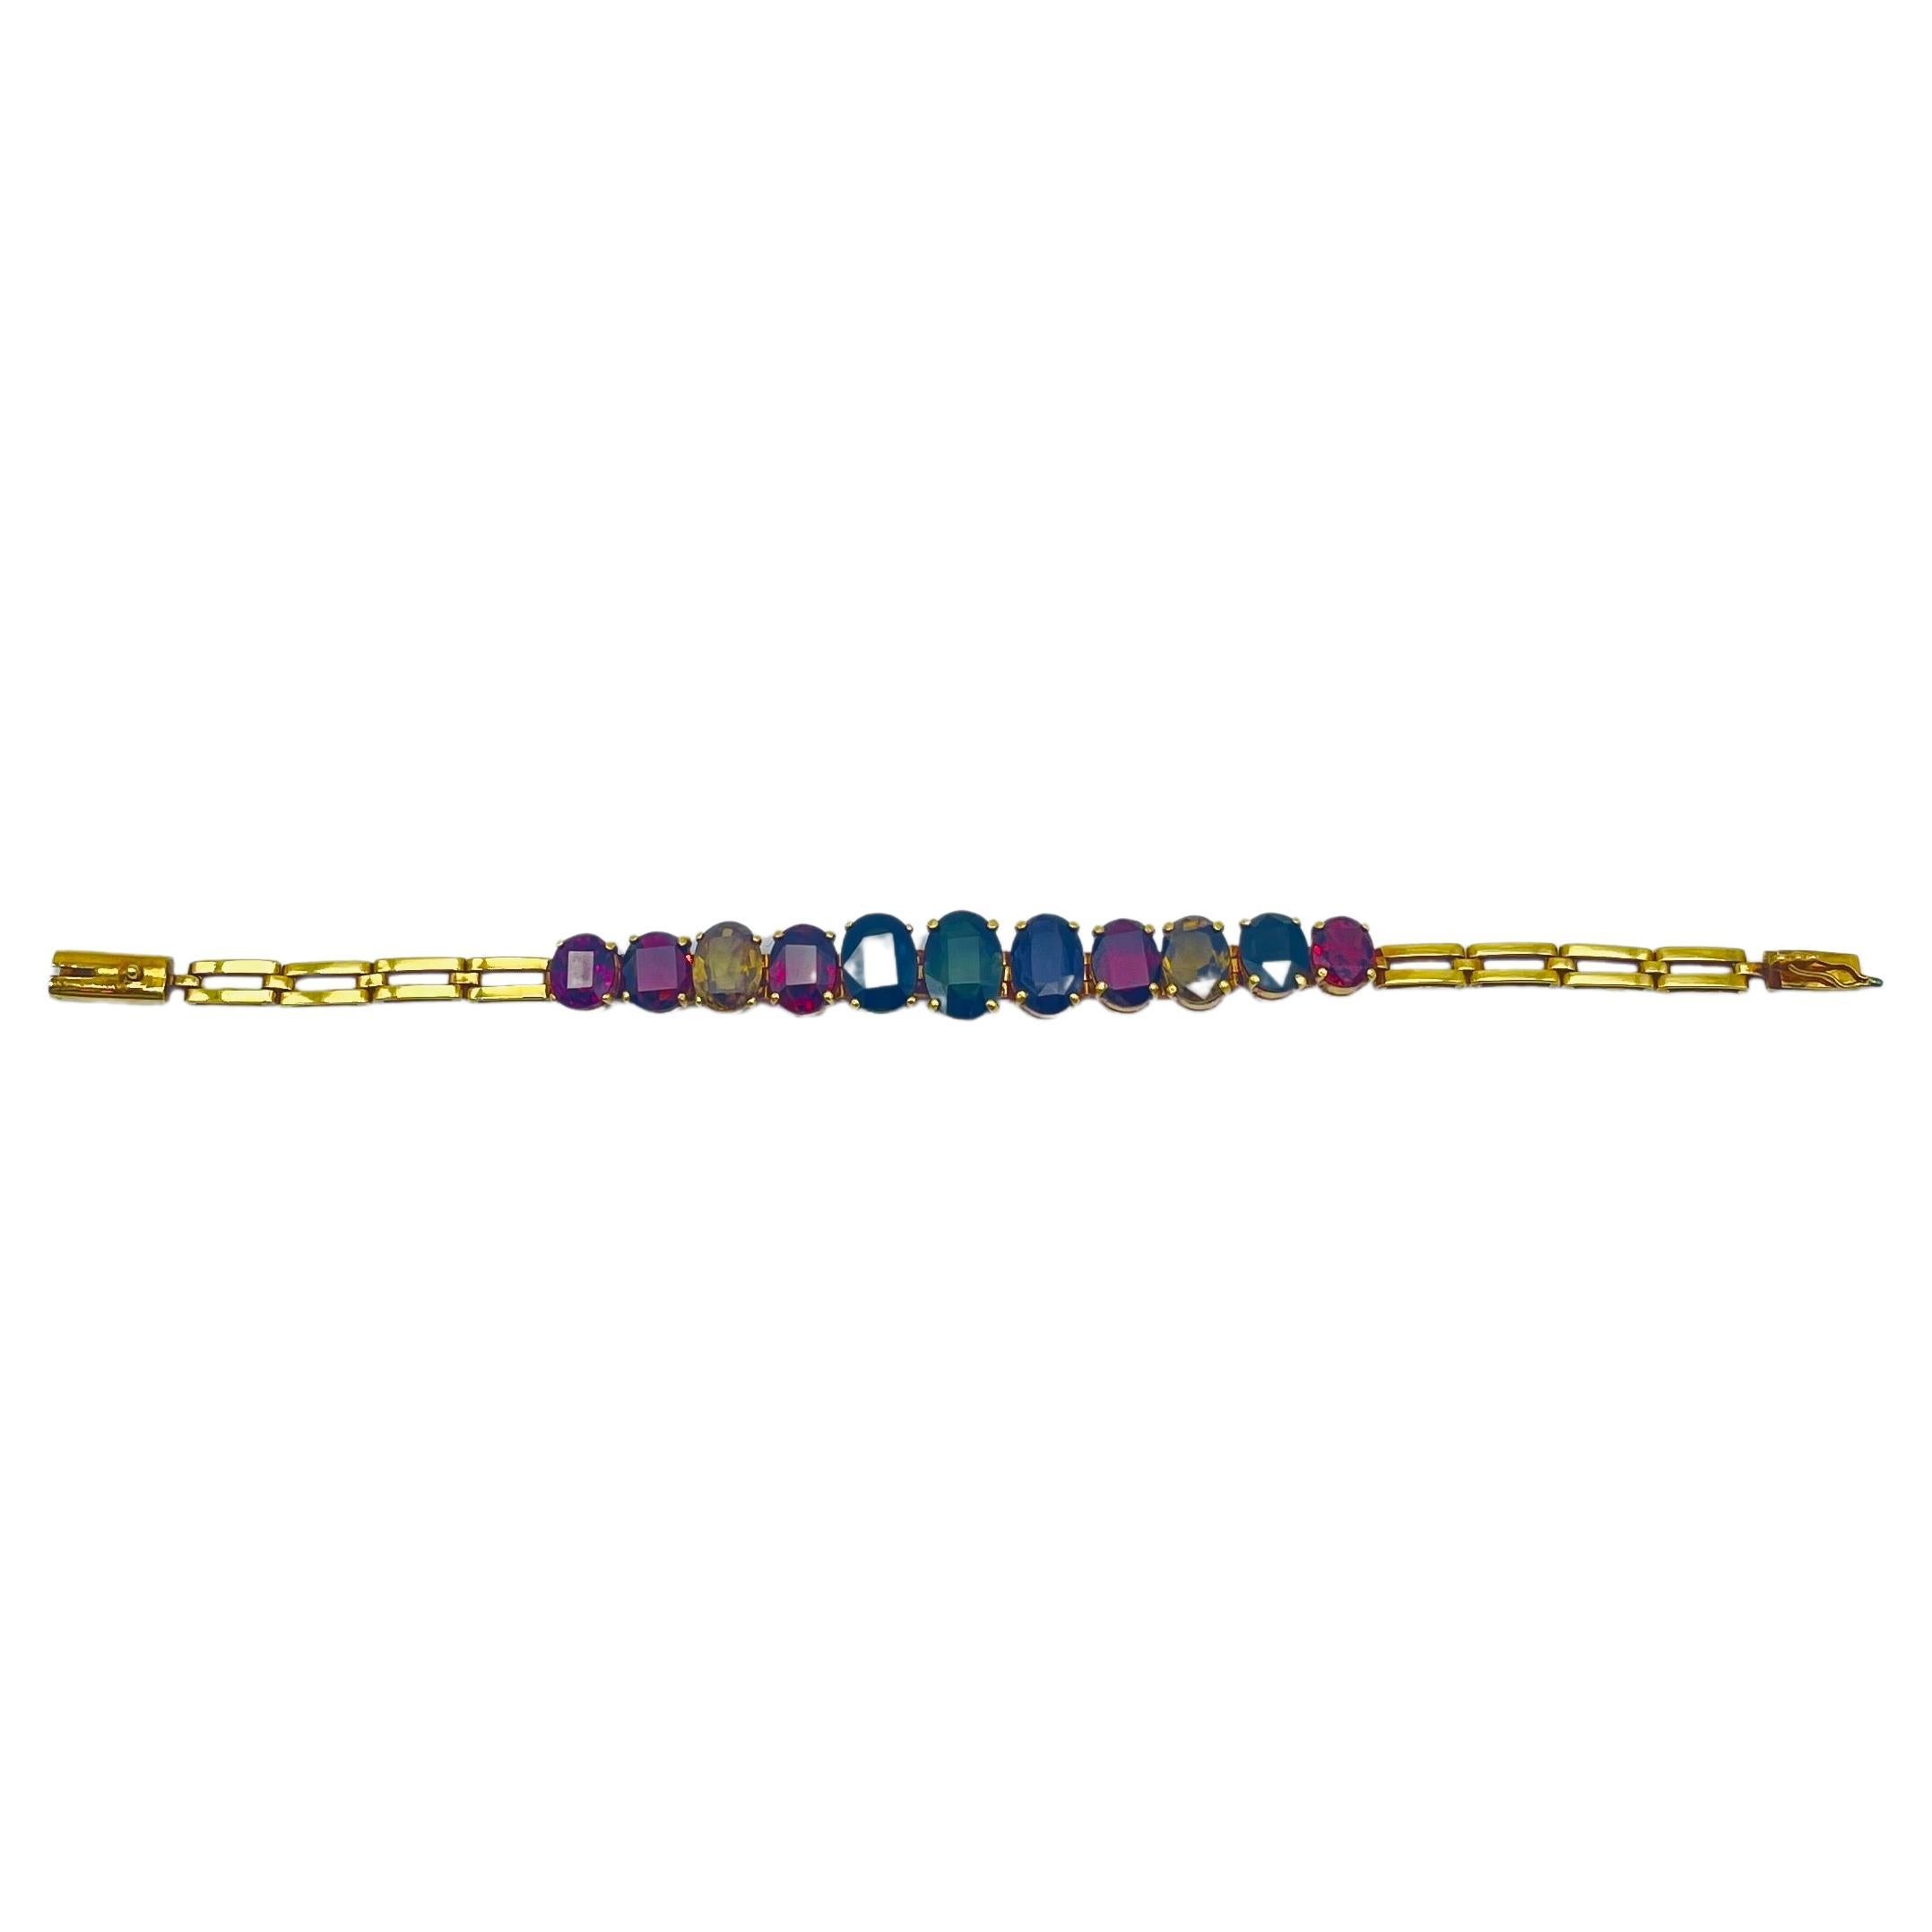 Taille ovale Bracelet de luxe Tutti frutti avec pierres précieuses en or jaune en vente